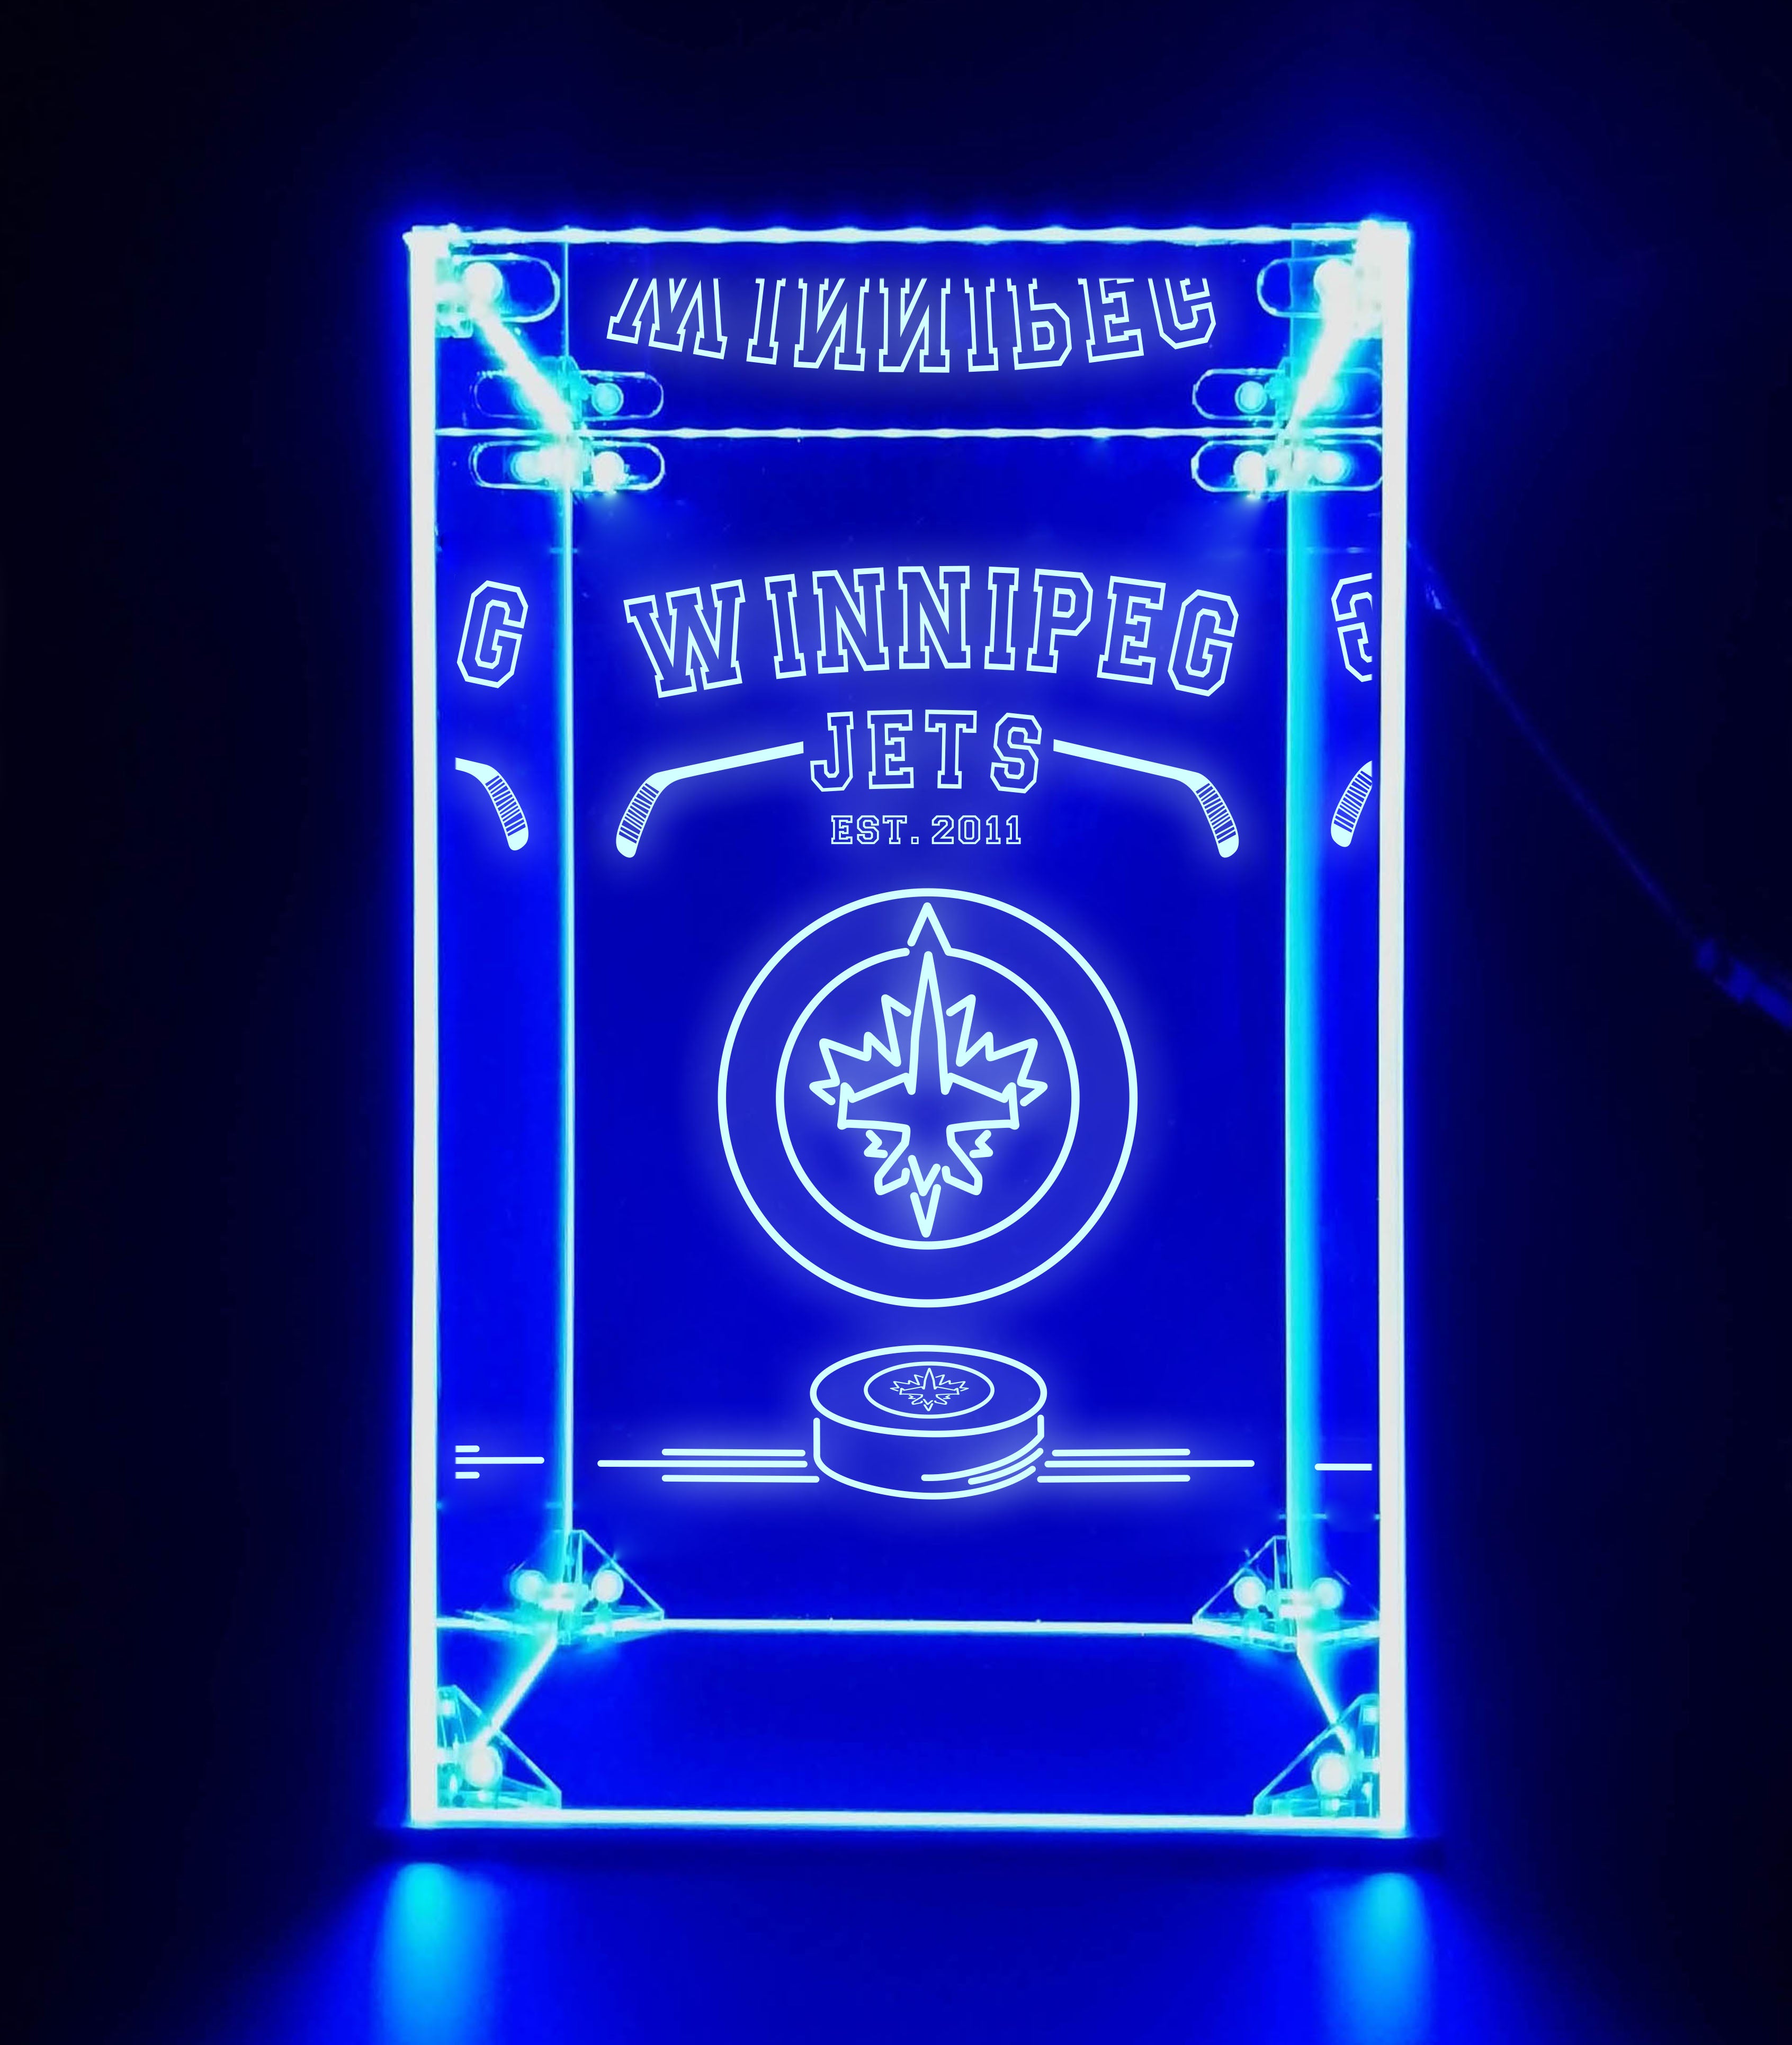 LED Display Case For Winnipeg Jets Sports Memorabilia